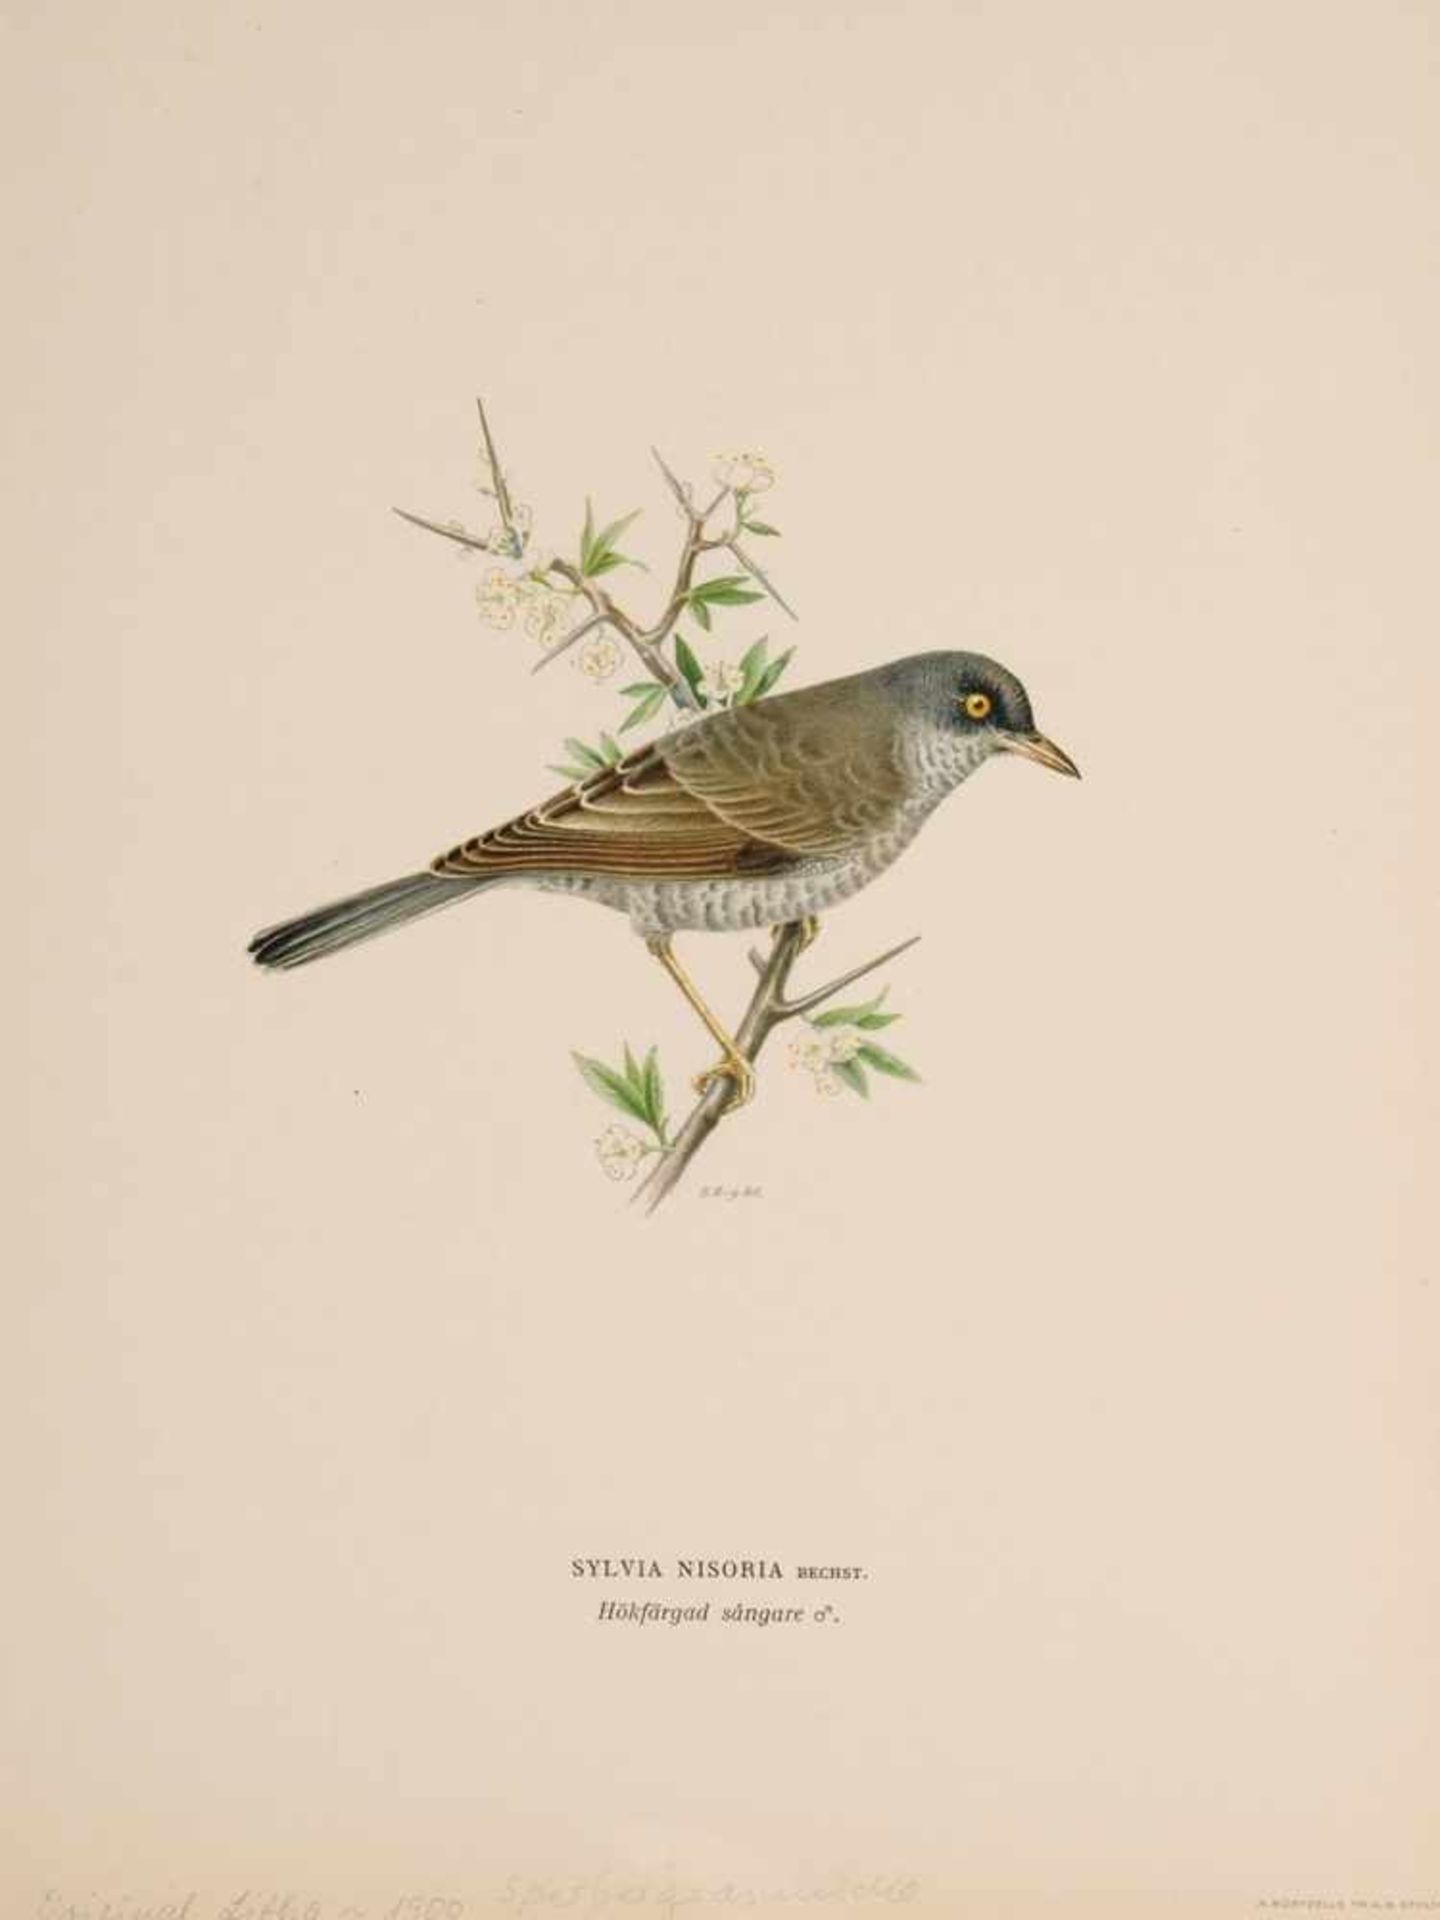 Fünf ornithologische IllustrationenChromolithographie. "Sylvia Nisoria" (Sperbergrasmücke)/ "Cractes